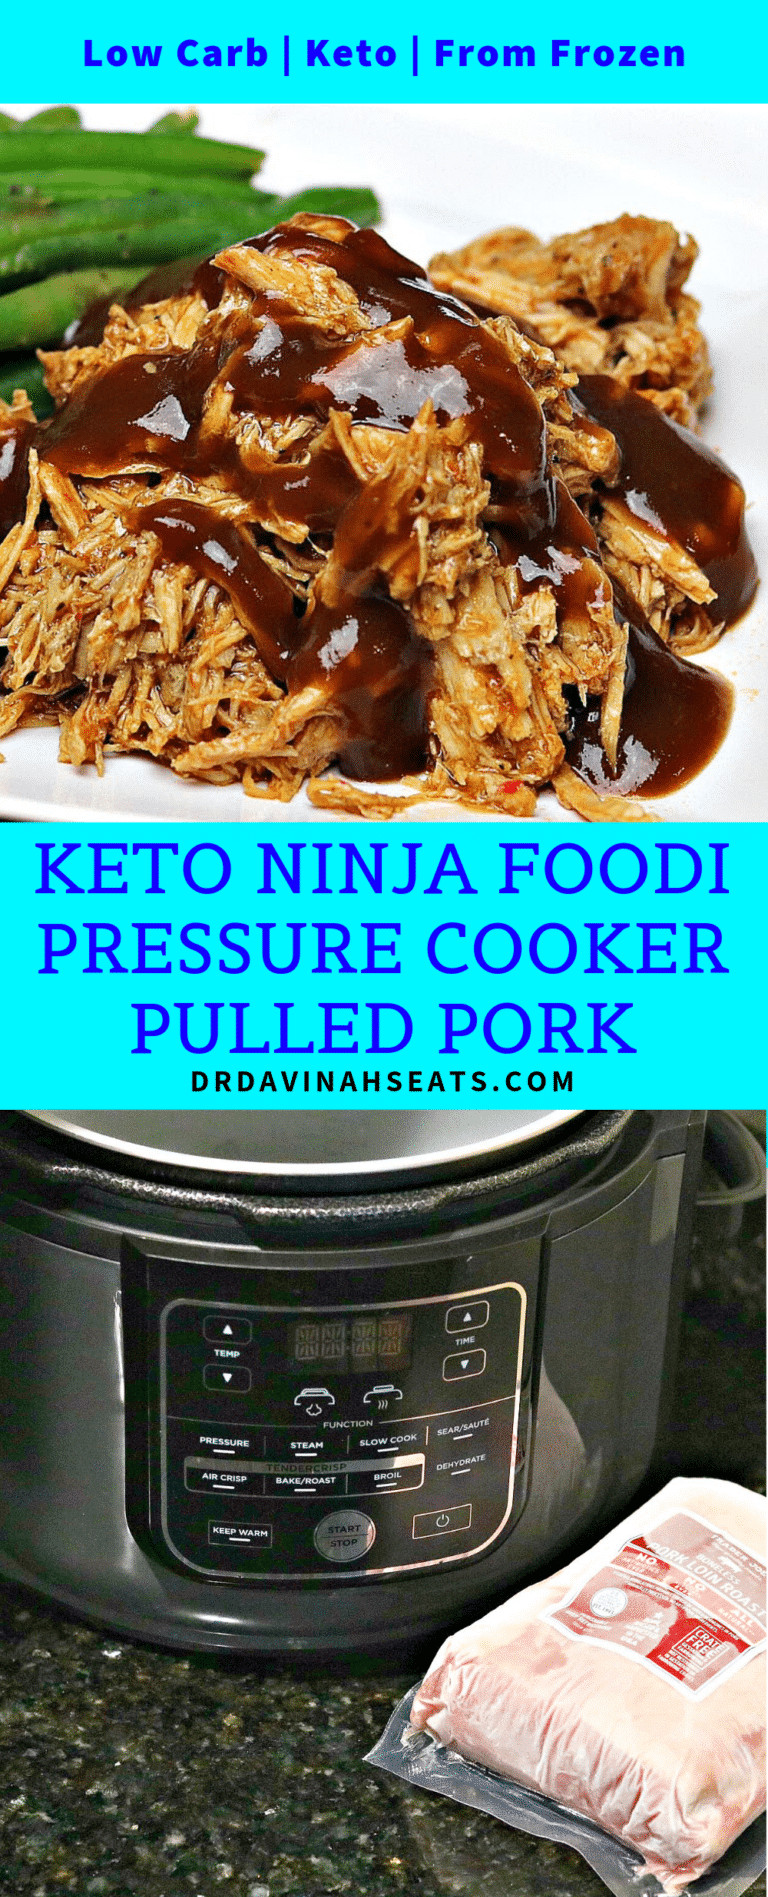 Ninja Foodi Recipes Keto Videos
 Keto Ninja Foodi Pressure Cooker Pulled Pork